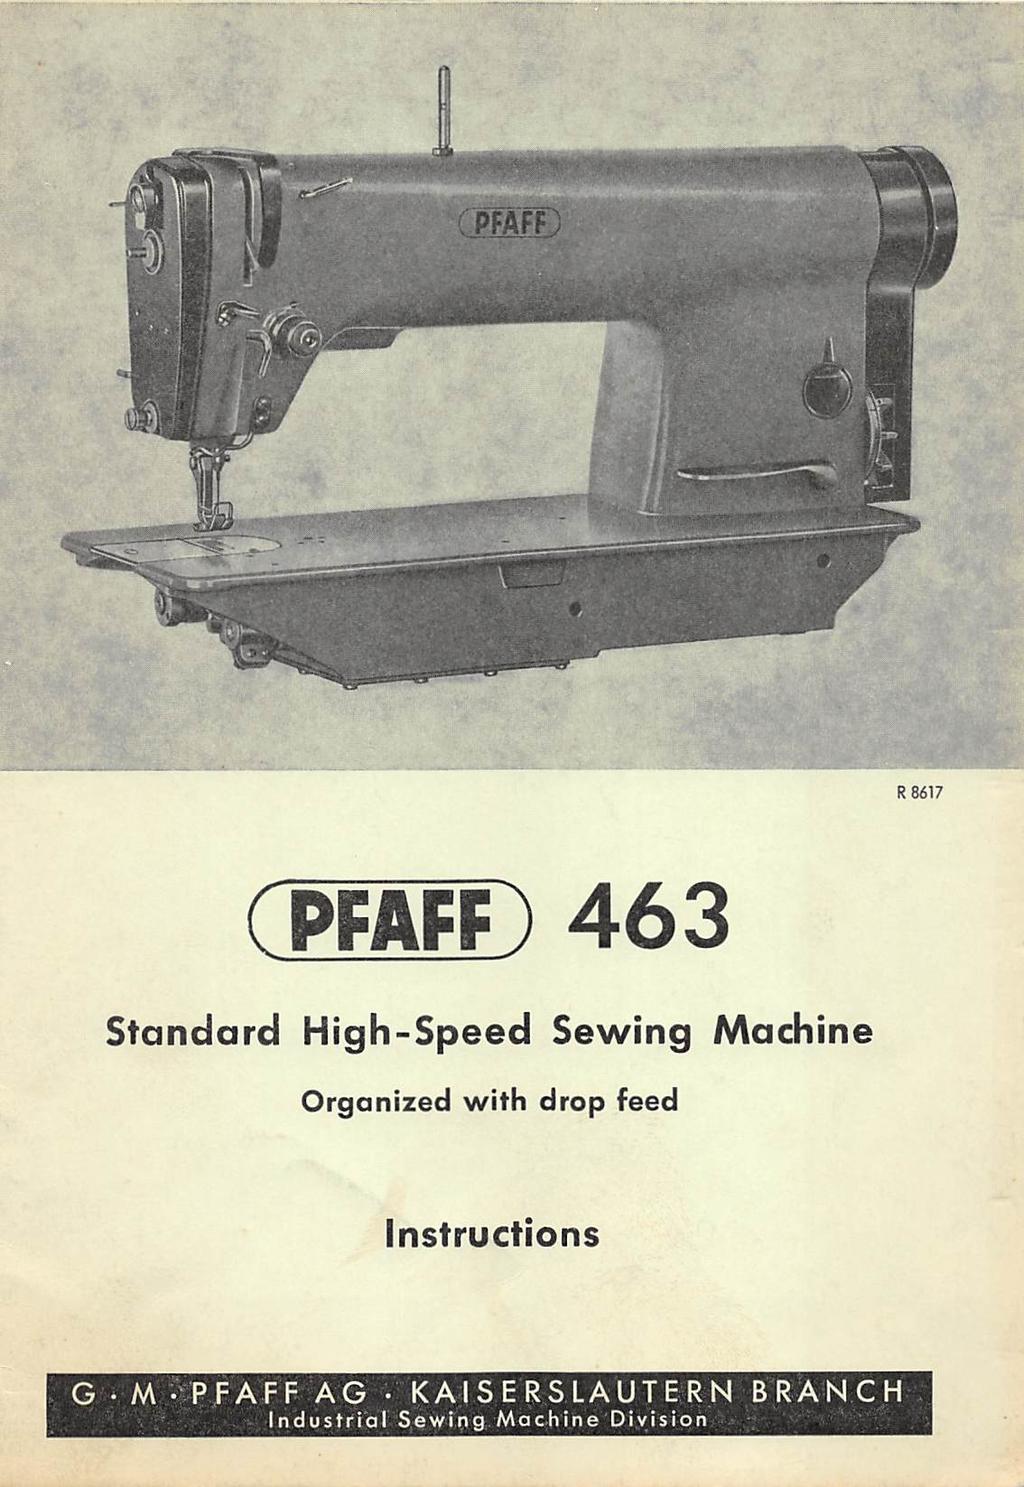 R8617 (PFAFFJ 463 Standard High-Speed Sewing Machine Organized with drop feed